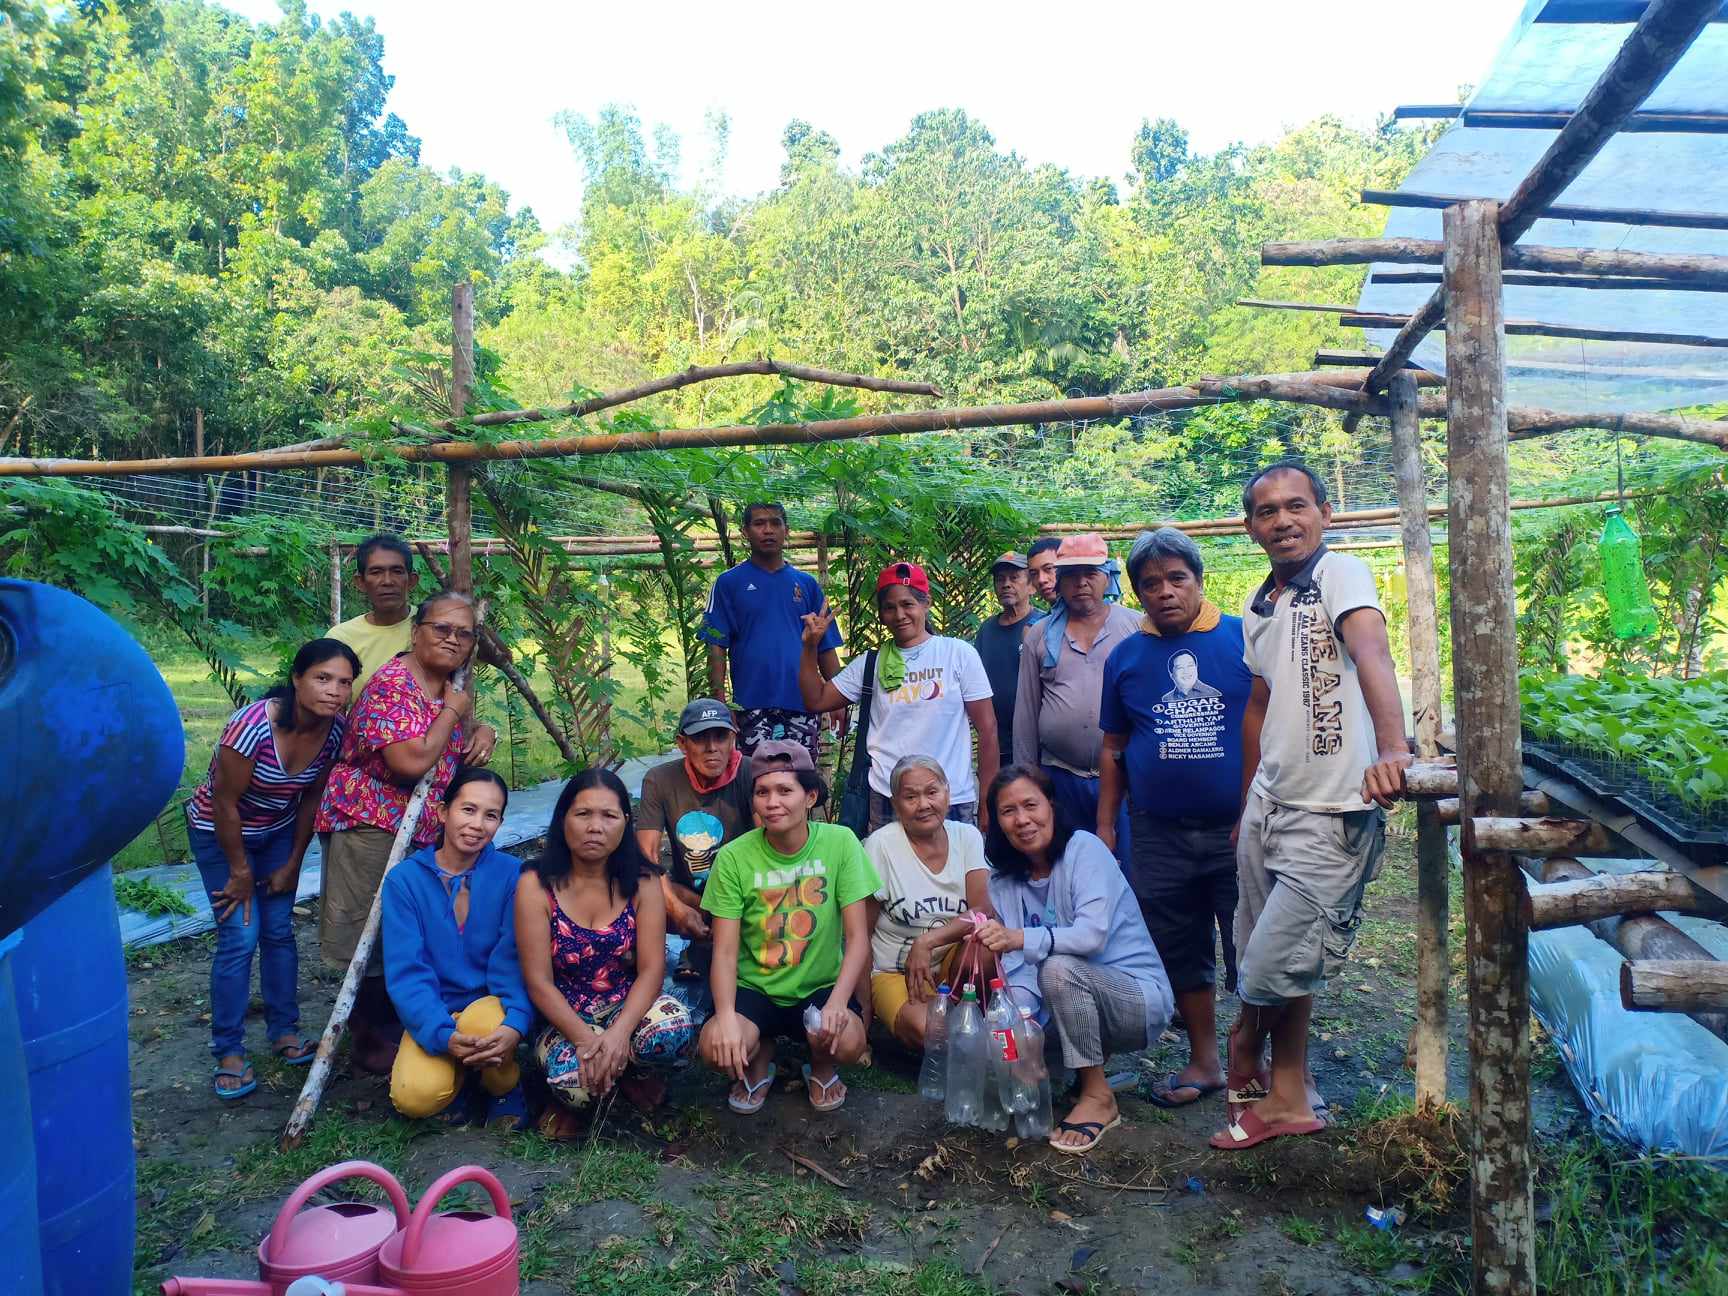 Bohol SAAD farmers establish communal vegetable garden, earn Php4K from first harvest